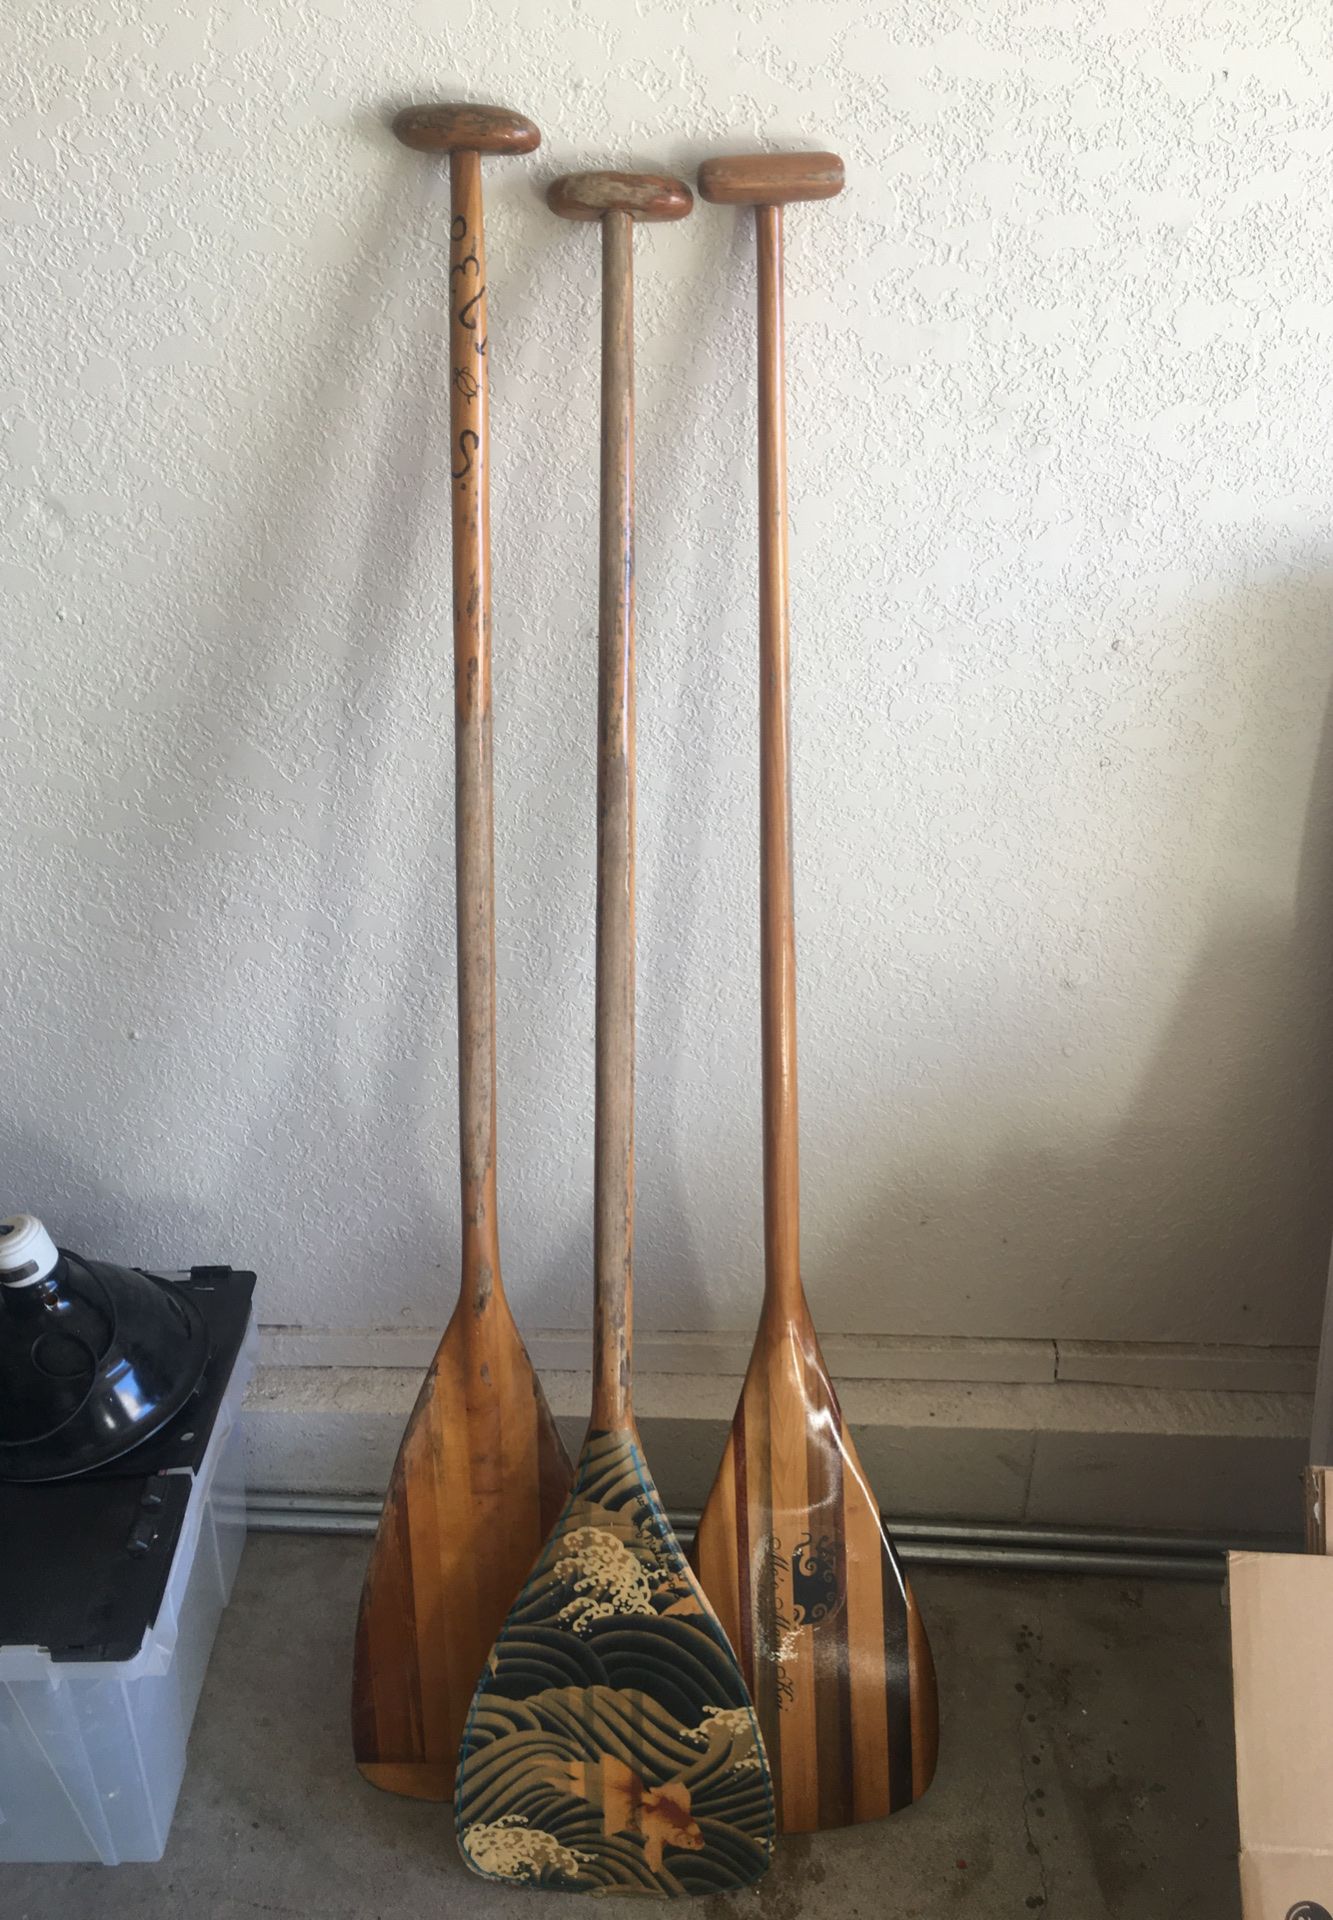 Canoe paddles